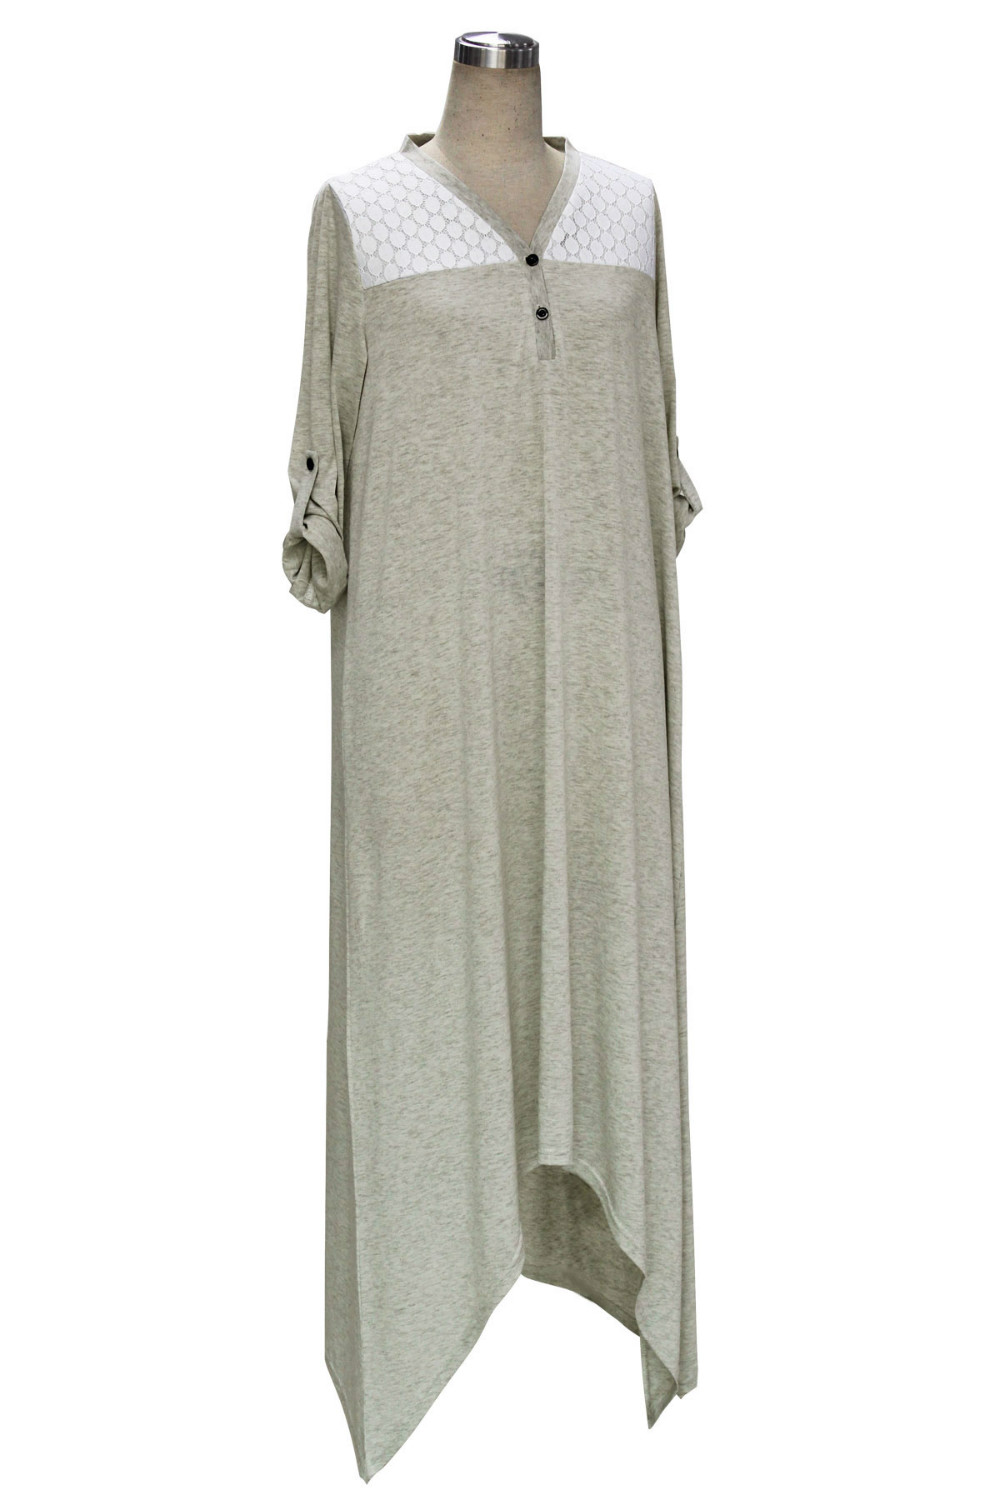 Fashion women gray lace patchwork Ankle-length Asymmetrical Dress button V-neck long sleeve plus size brand design